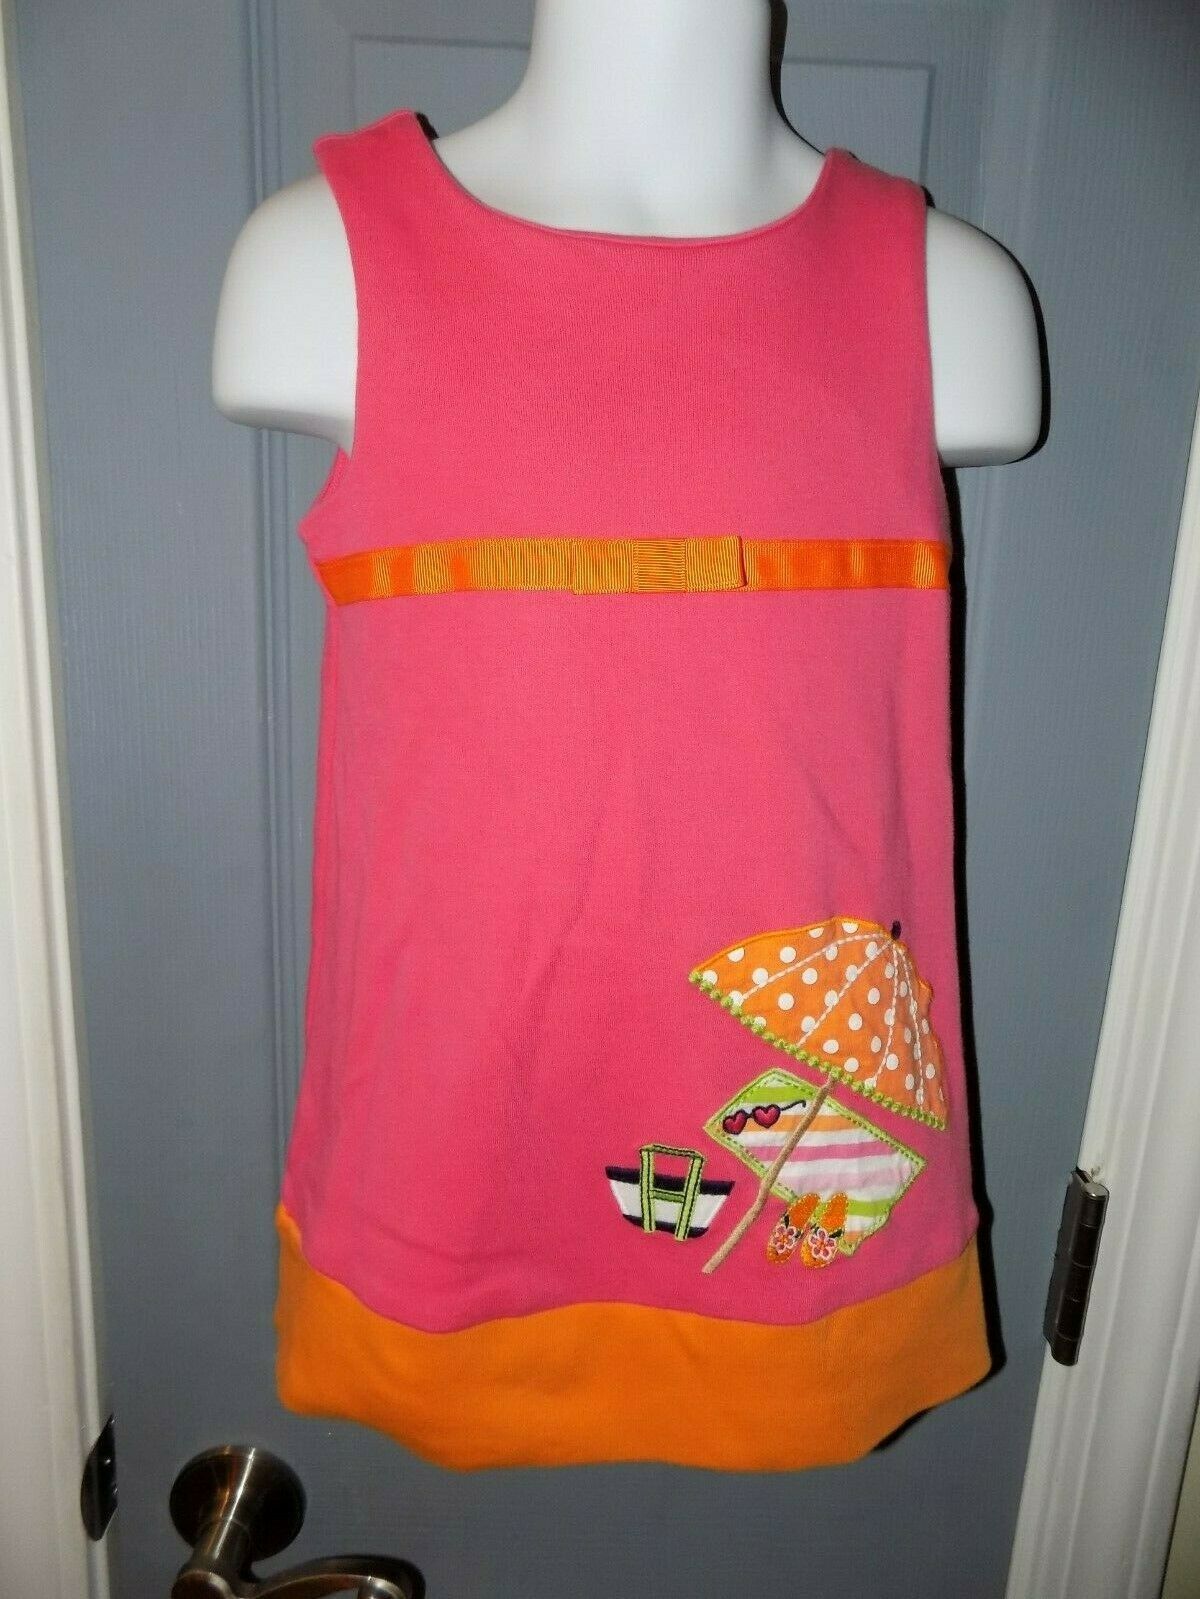 Hartstrings Pink & Orange Dress W/ Beach Scene Applique Size 3T Girl's EUC - $21.75